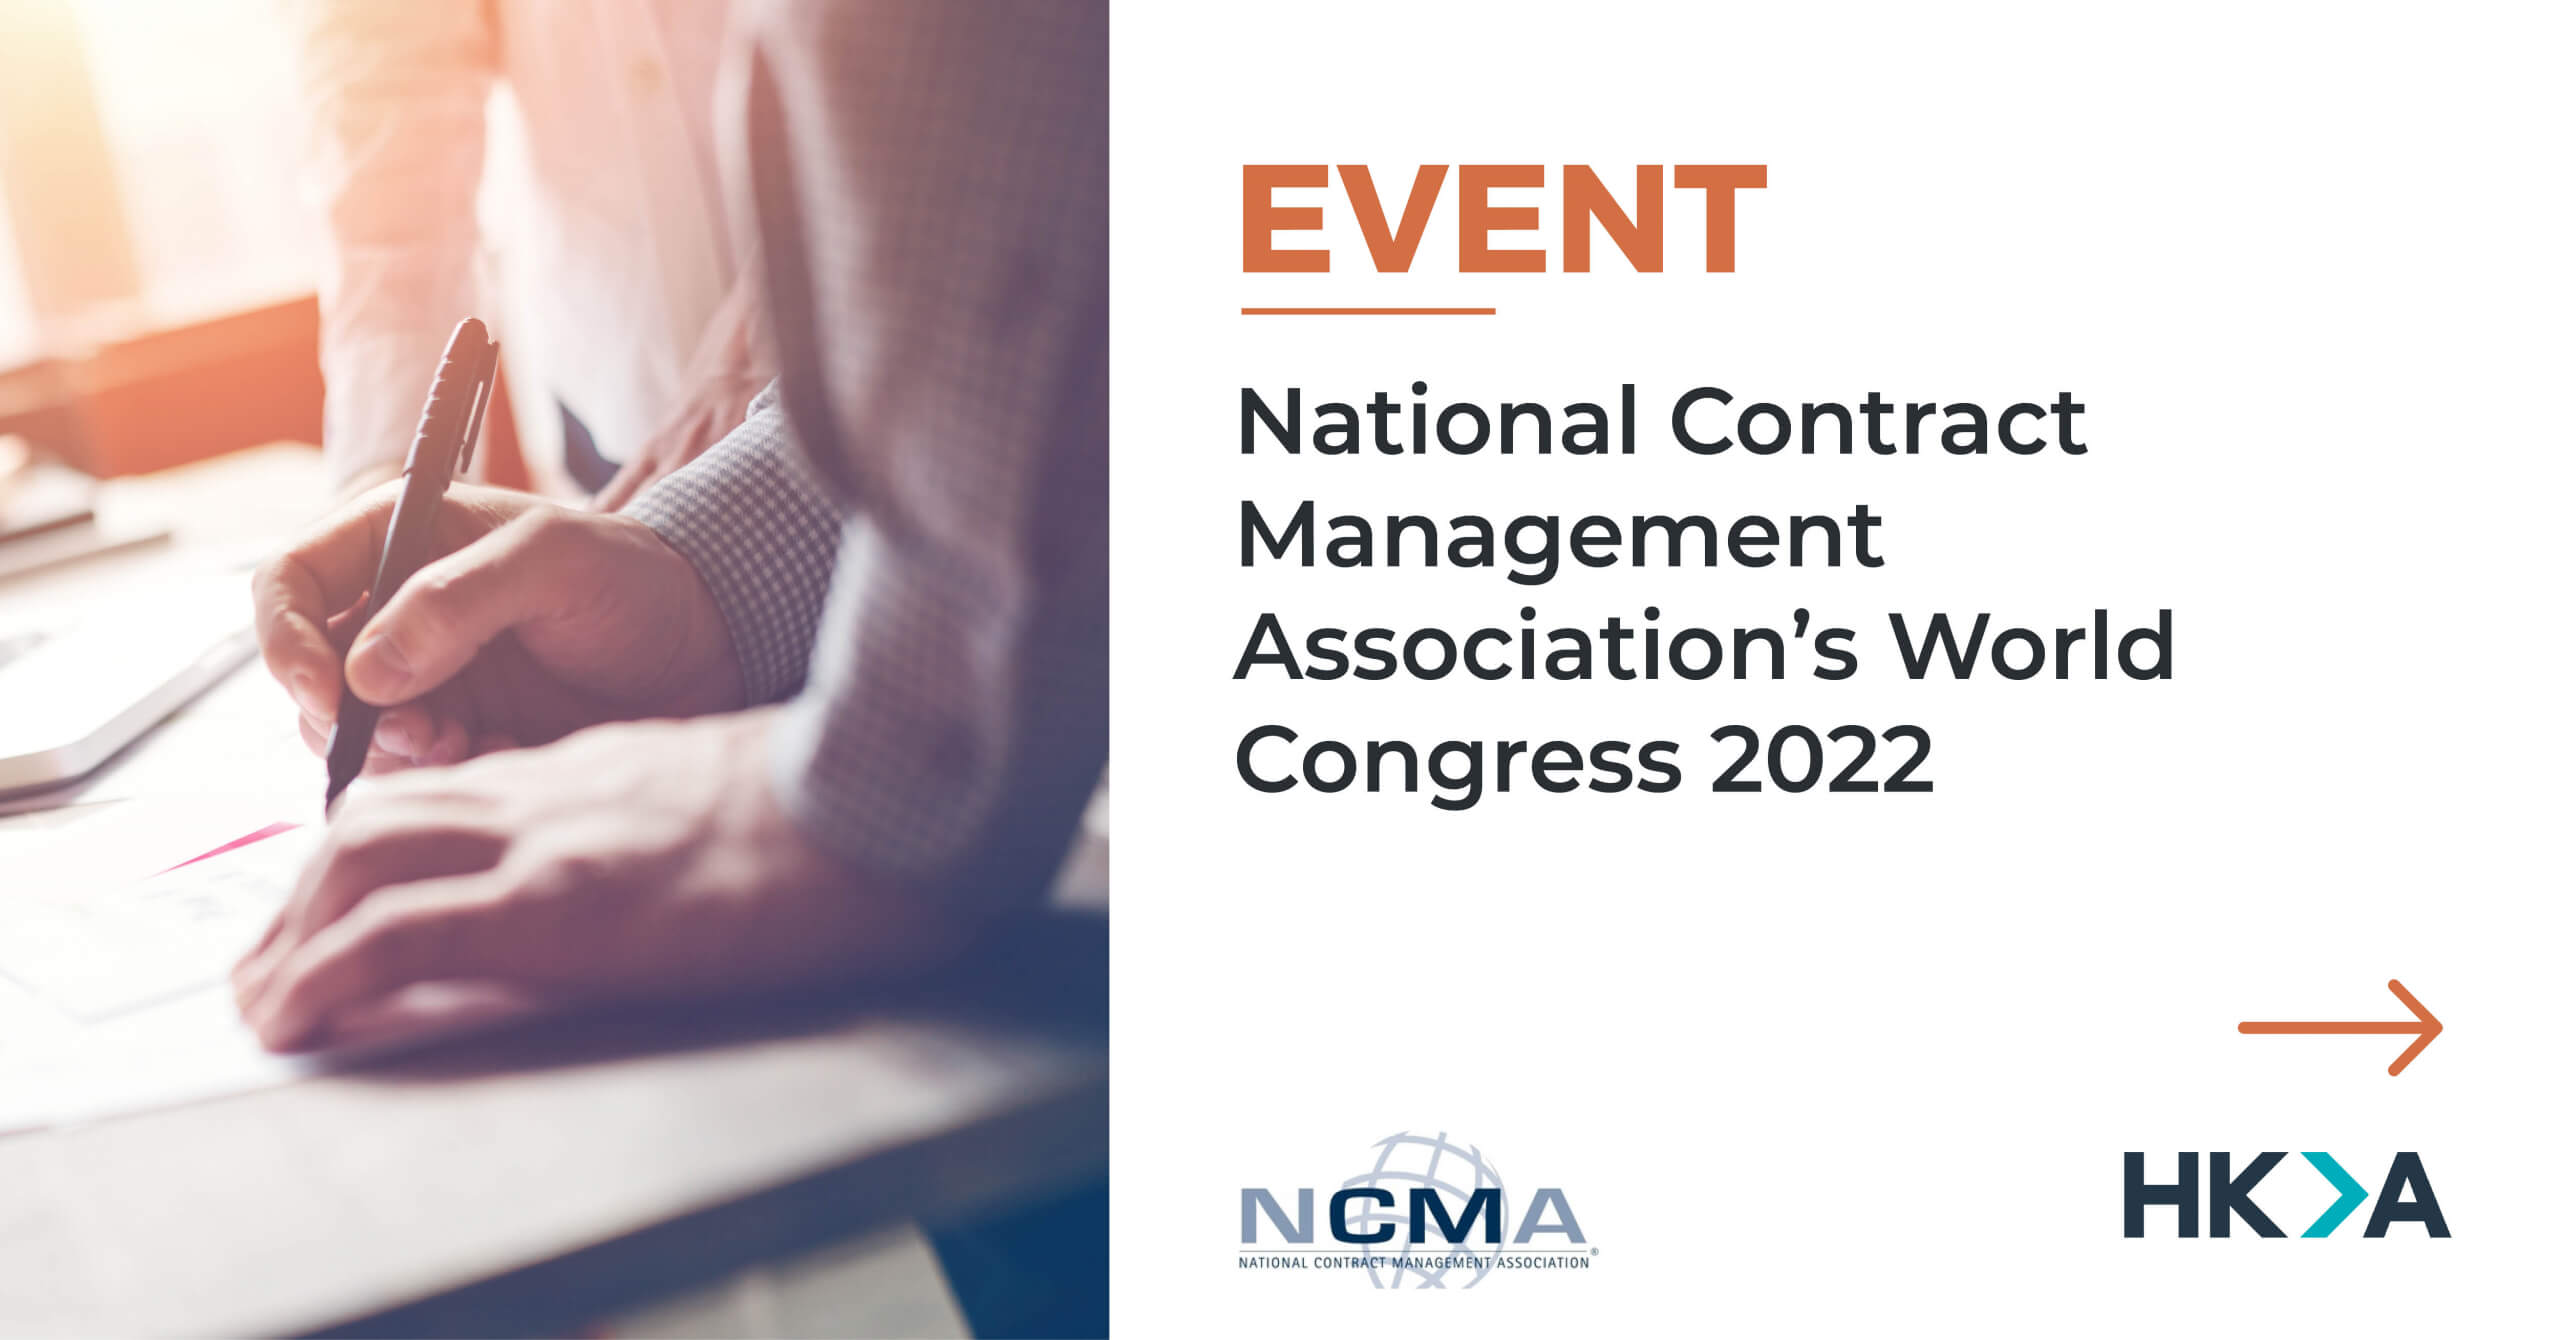 National Contract Management Association’s (NCMA’s) World Congress 2022